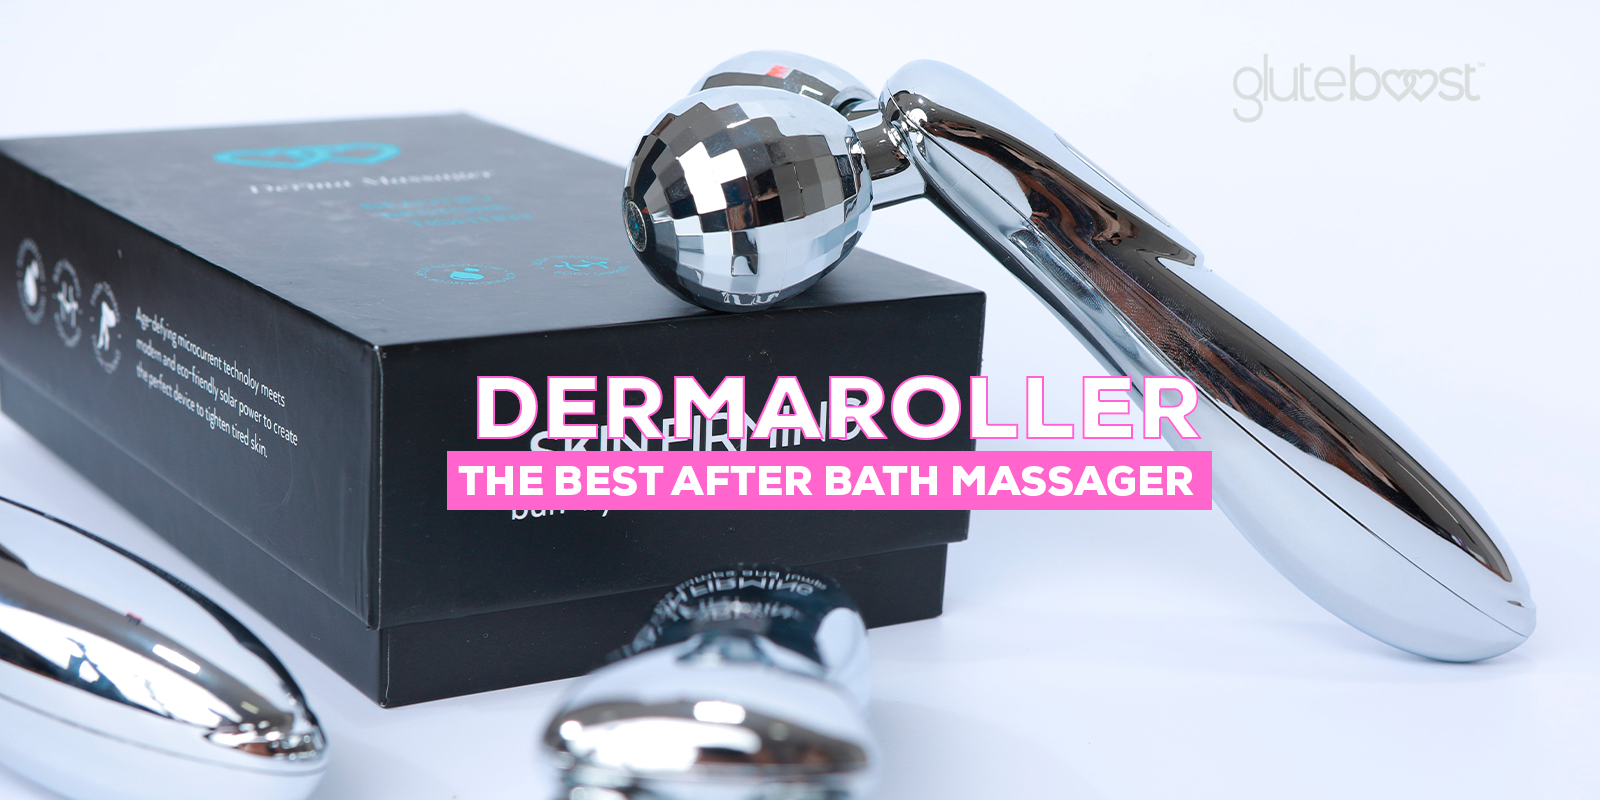 DermaRoller: The Best After Bath Massager